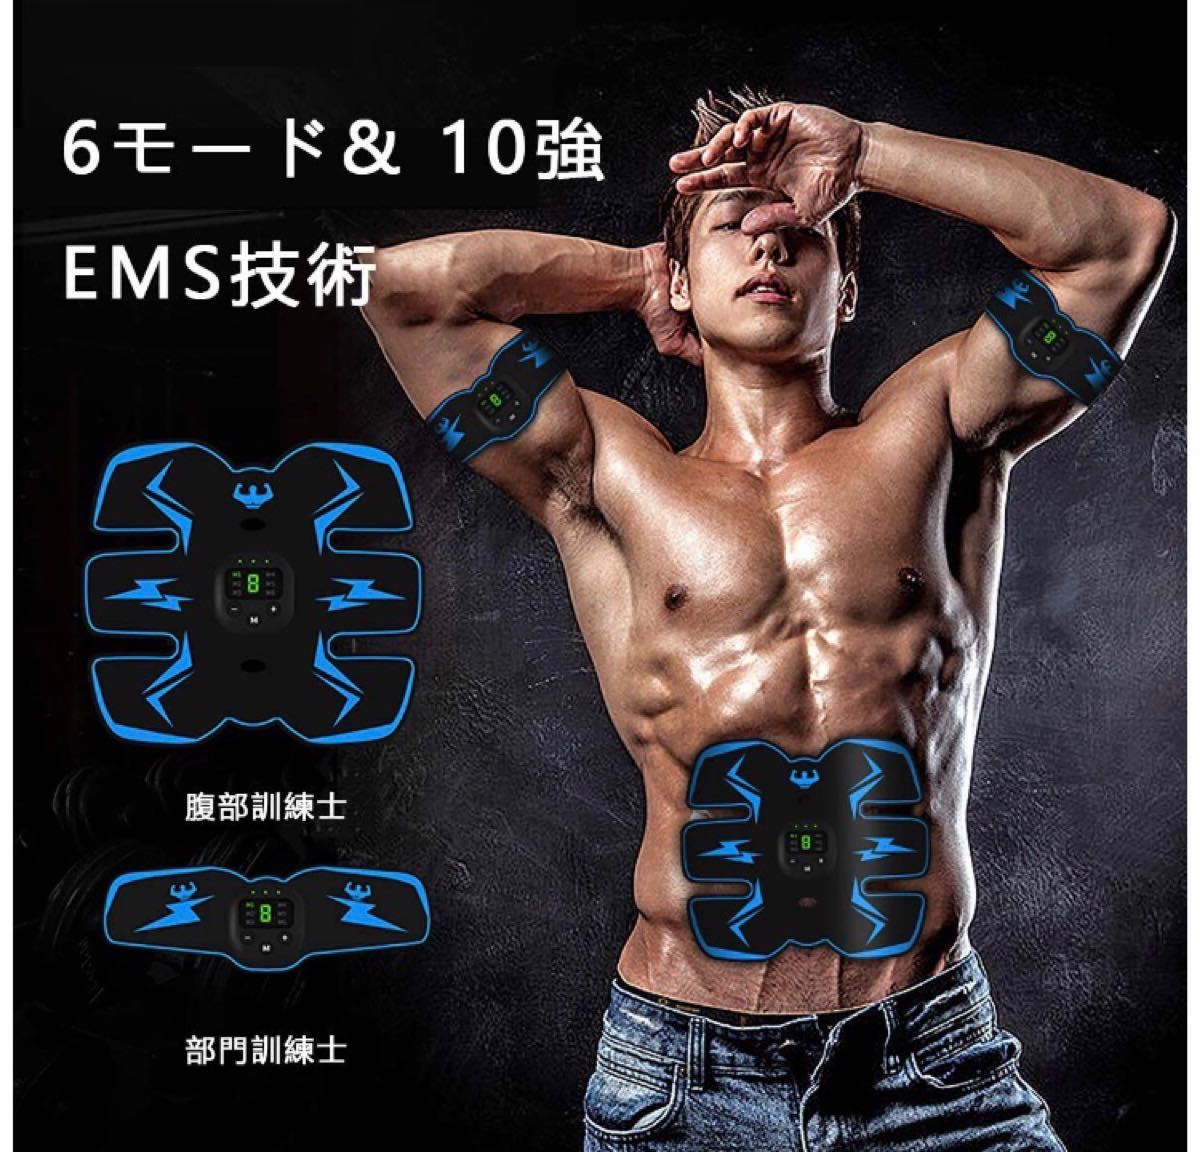 EMS 腹筋ベルト液晶表示 USB充電式 腹筋 腕筋 筋トレ器具腹筋トレーニング